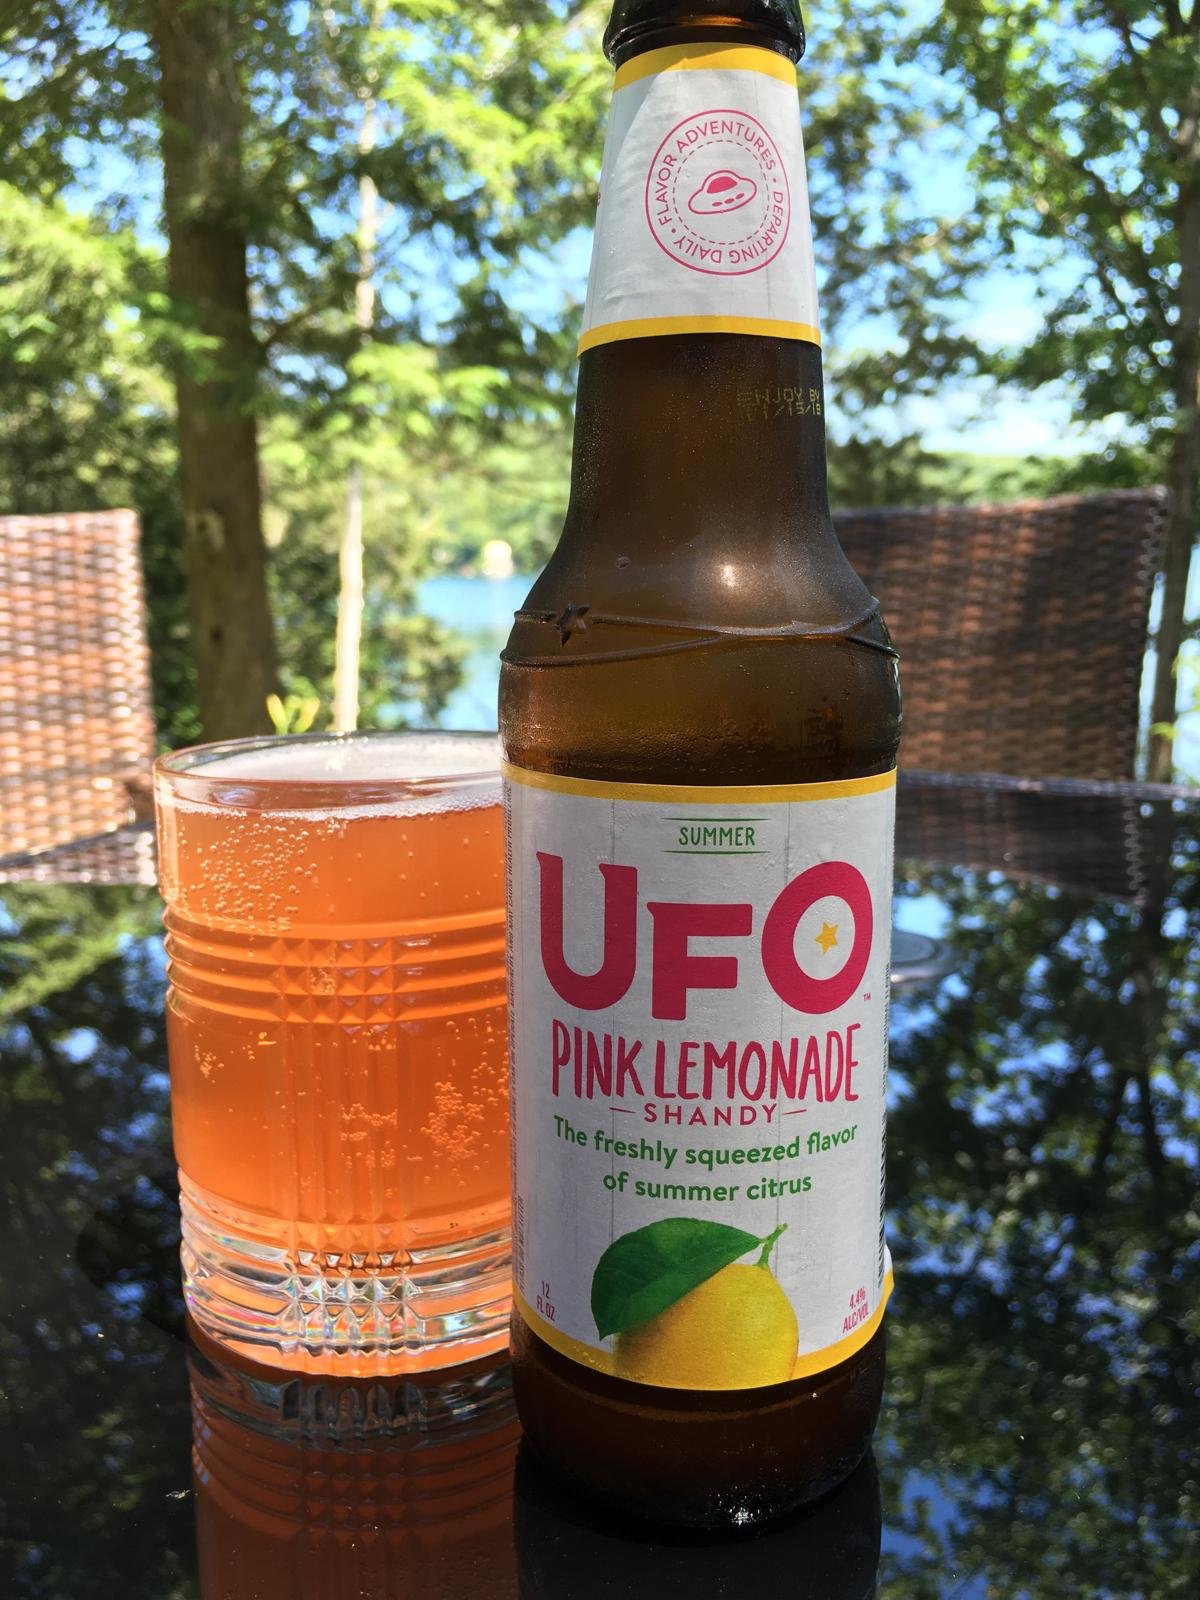 UFO Pink Lemonade Shandy